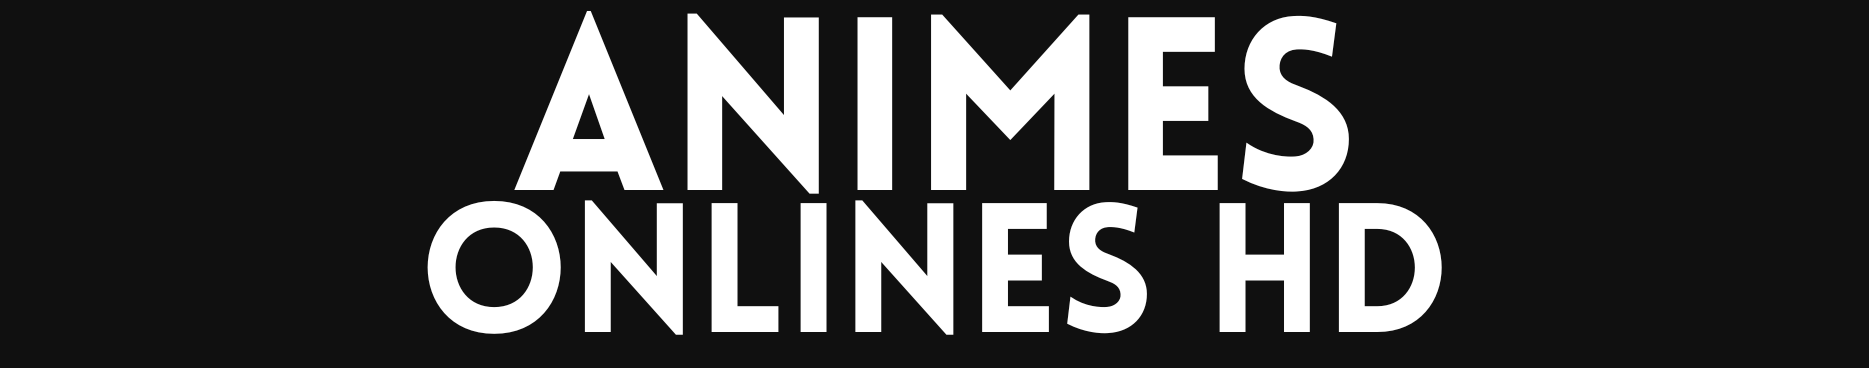 AnimesOnlinesHD - Filmes, Séries, Animes, Novelas, Canais Online